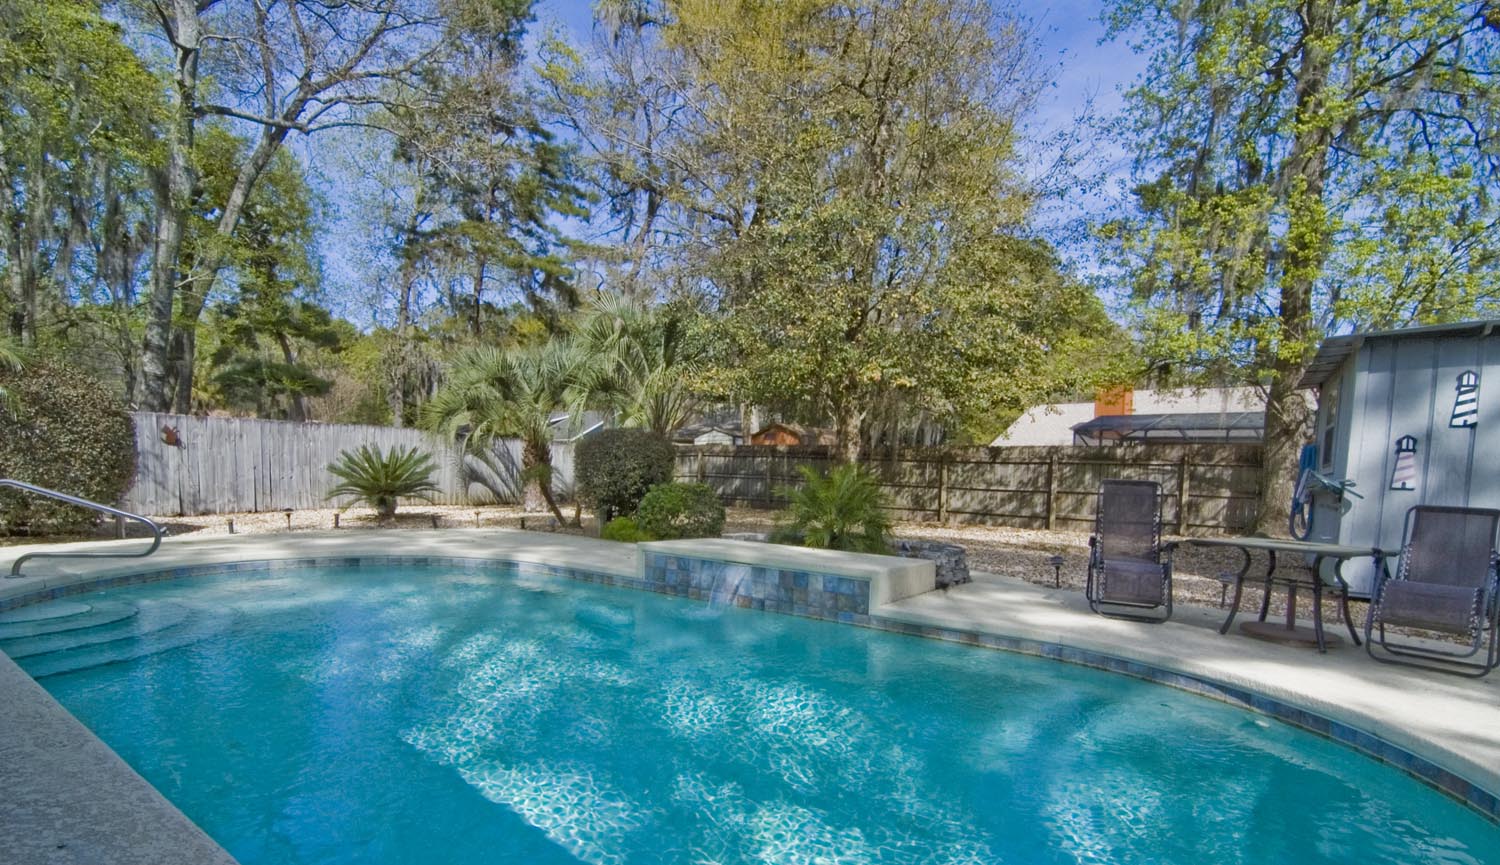 Sold: Summer Creek Pool Home